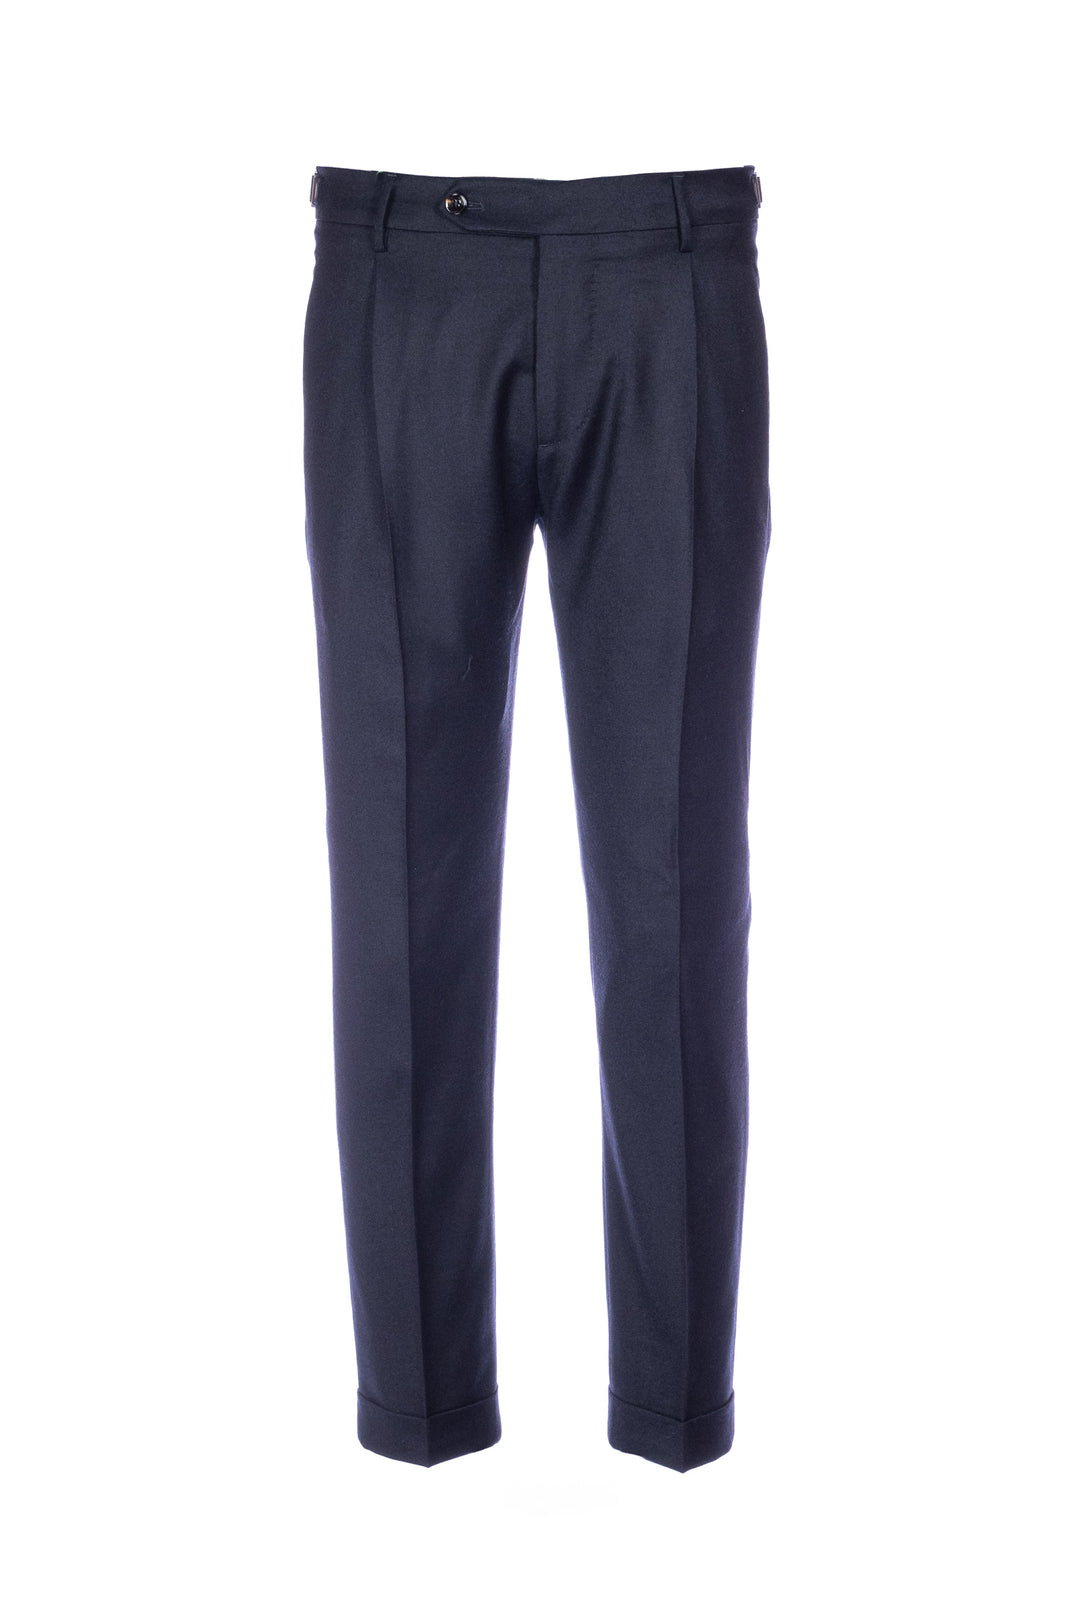 BERWICH Pantalone retro blu navy in lana vergine stretch con una pince - Mancinelli 1954